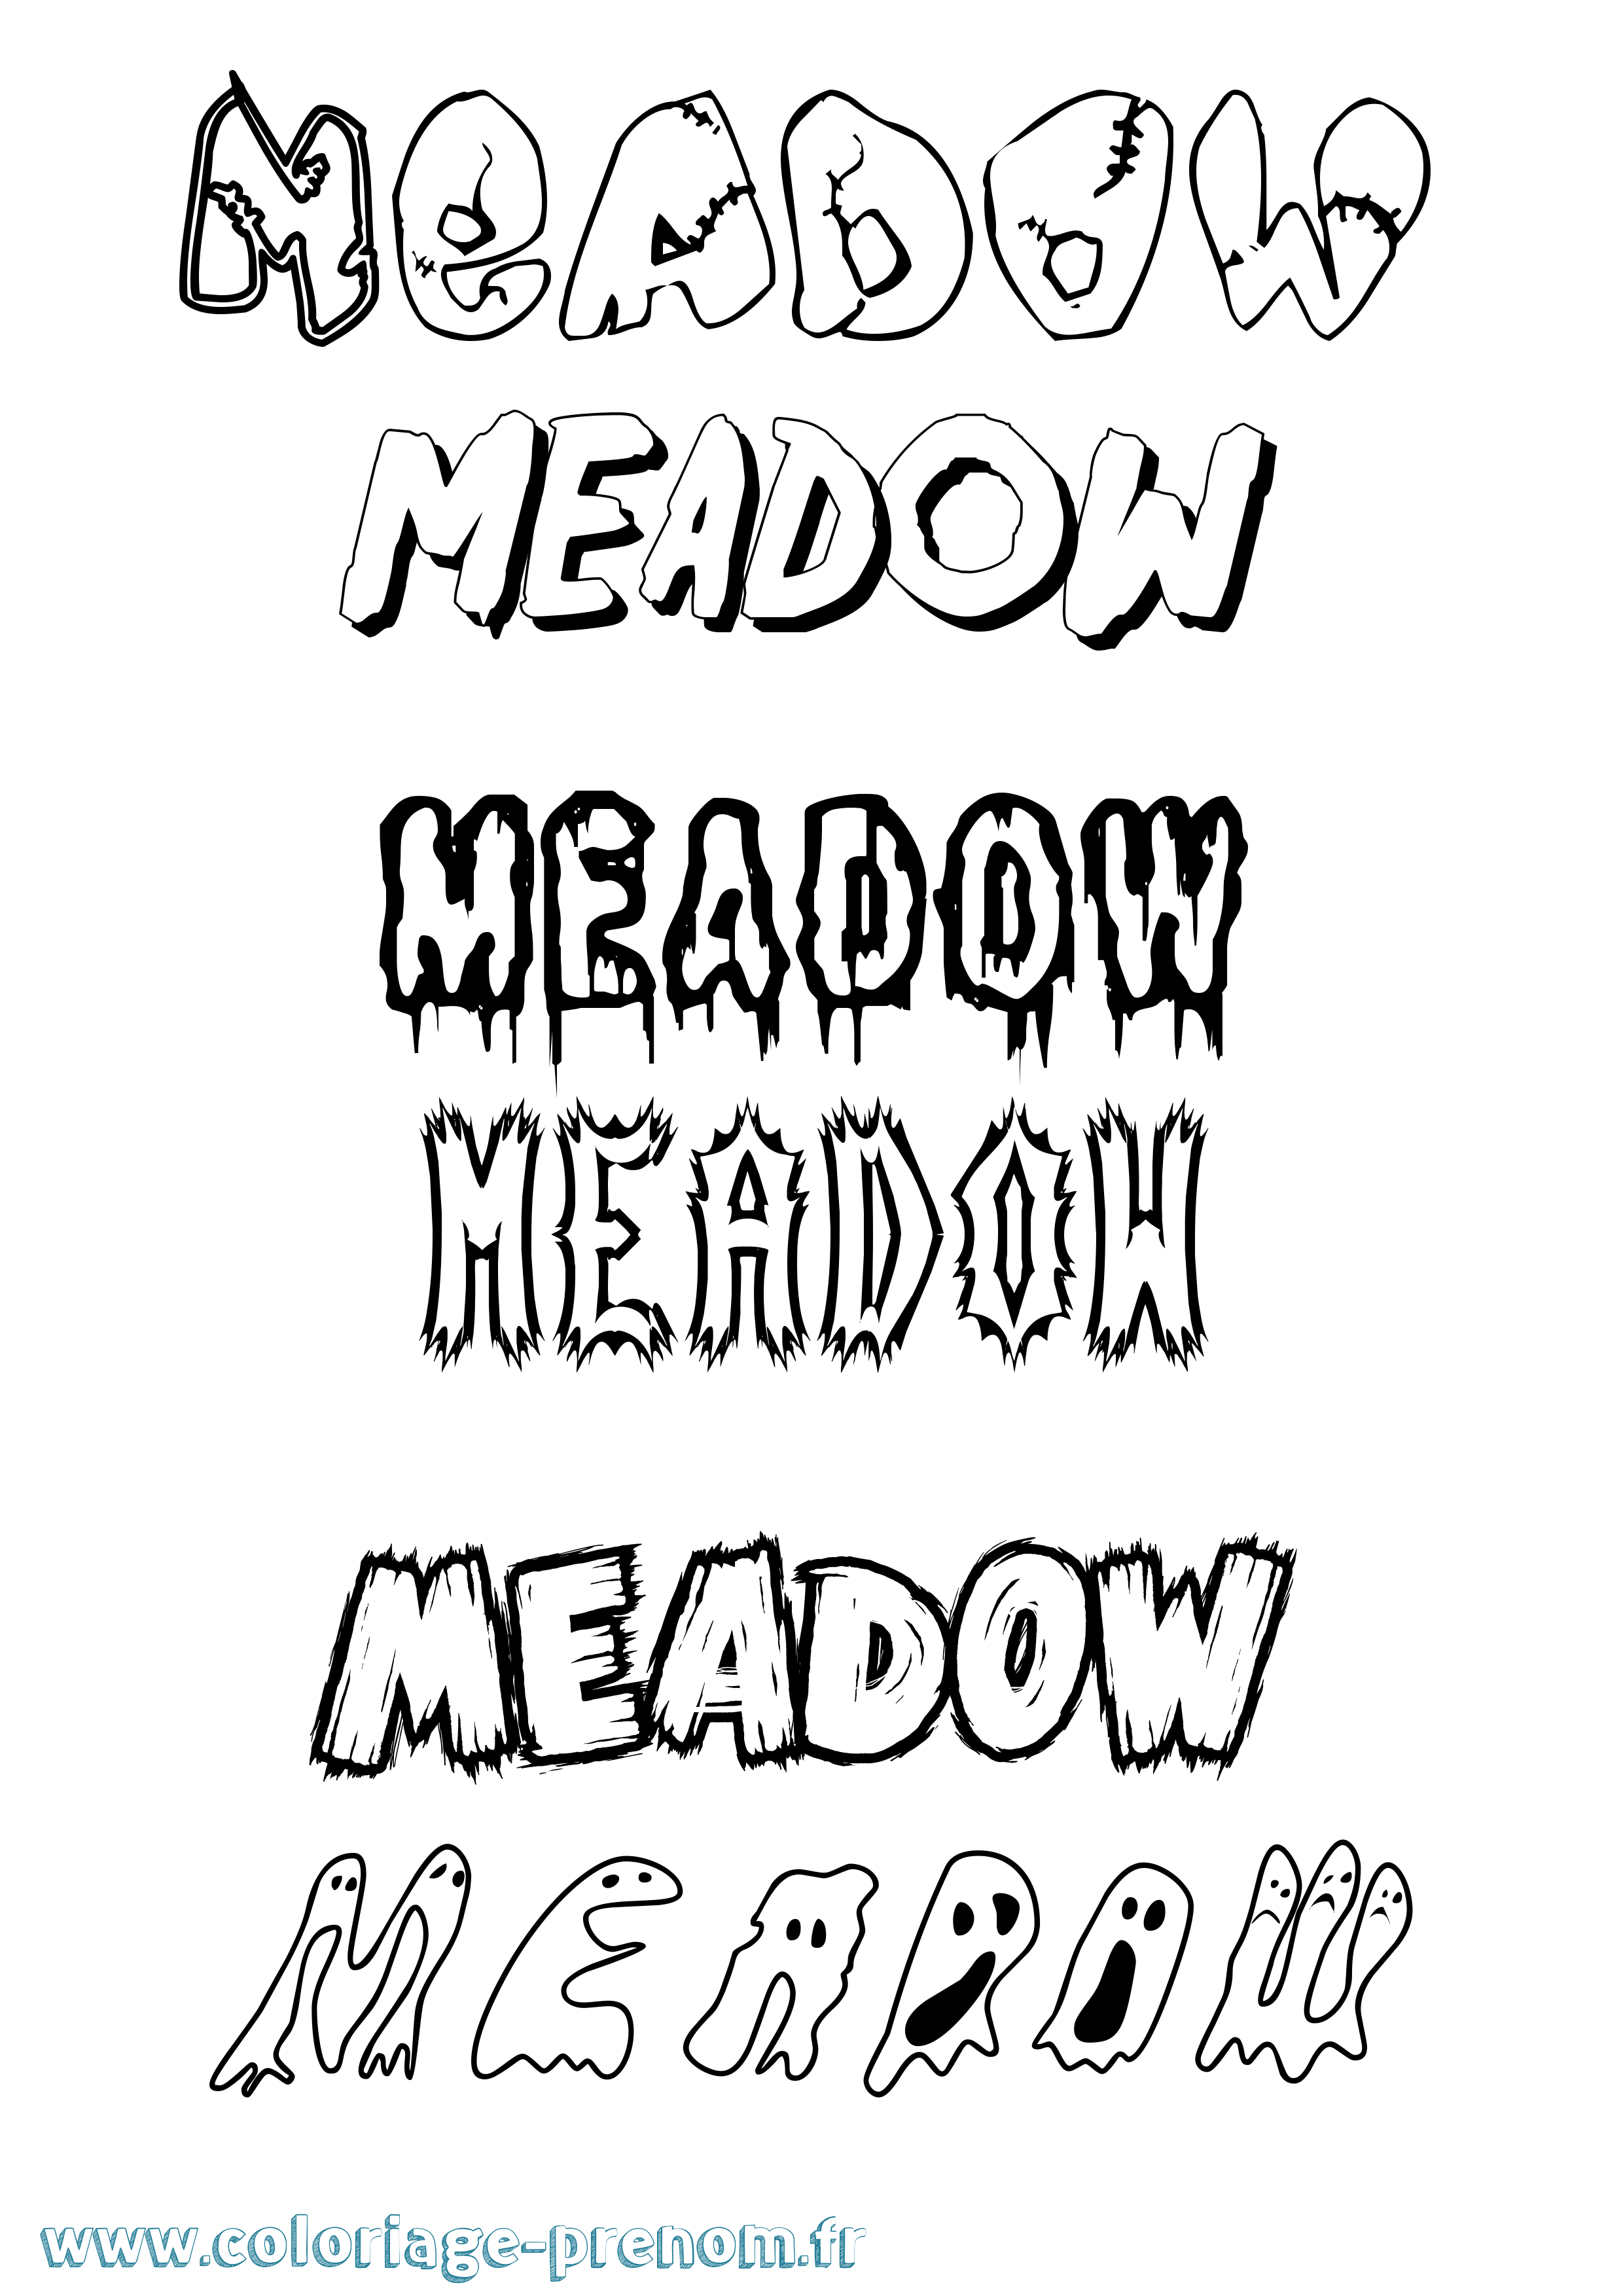 Coloriage prénom Meadow Frisson